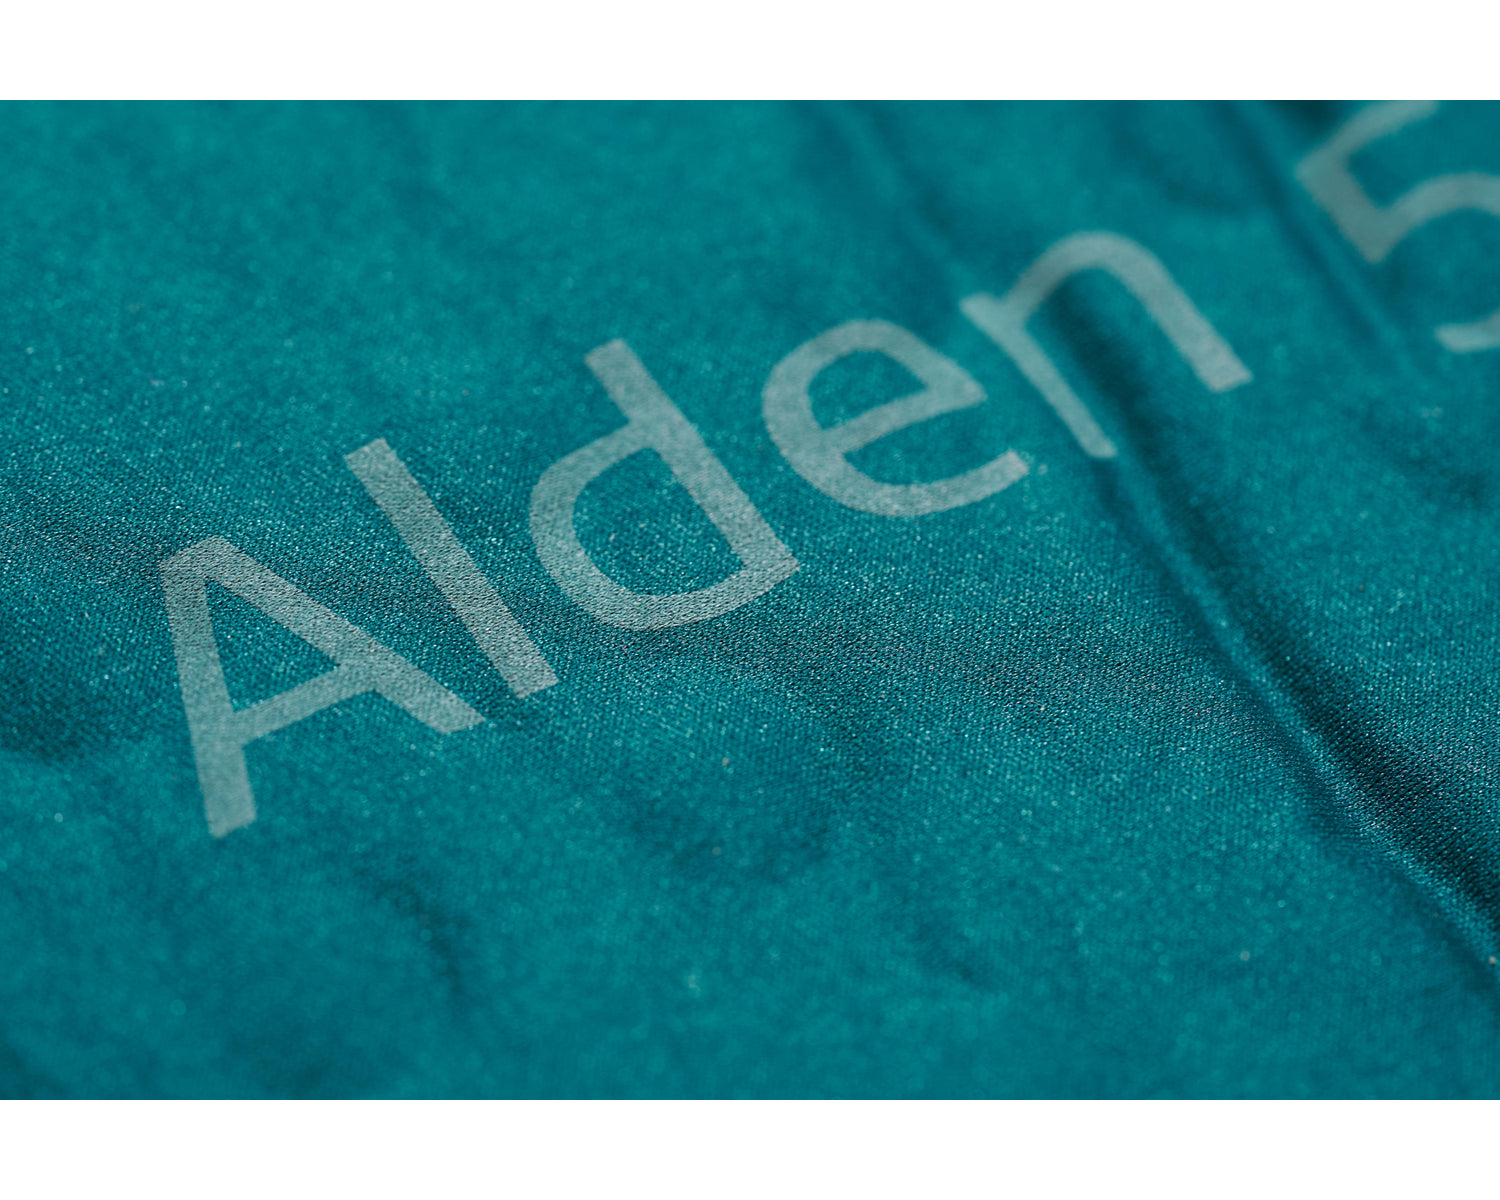 Alden 5.0 S mat - Reflecting Pond